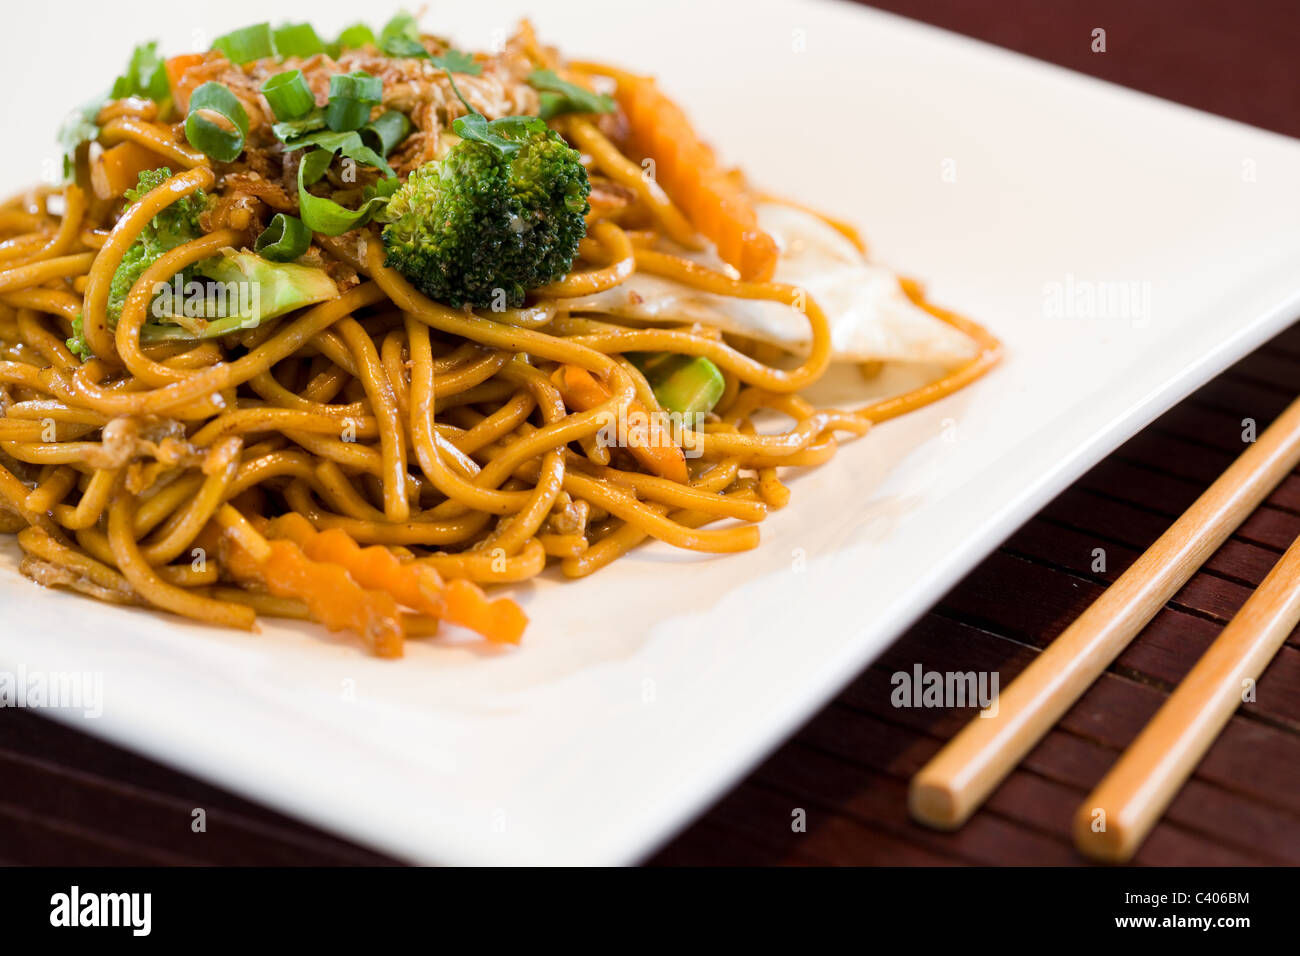 Thai stir fried noodles Stock Photo